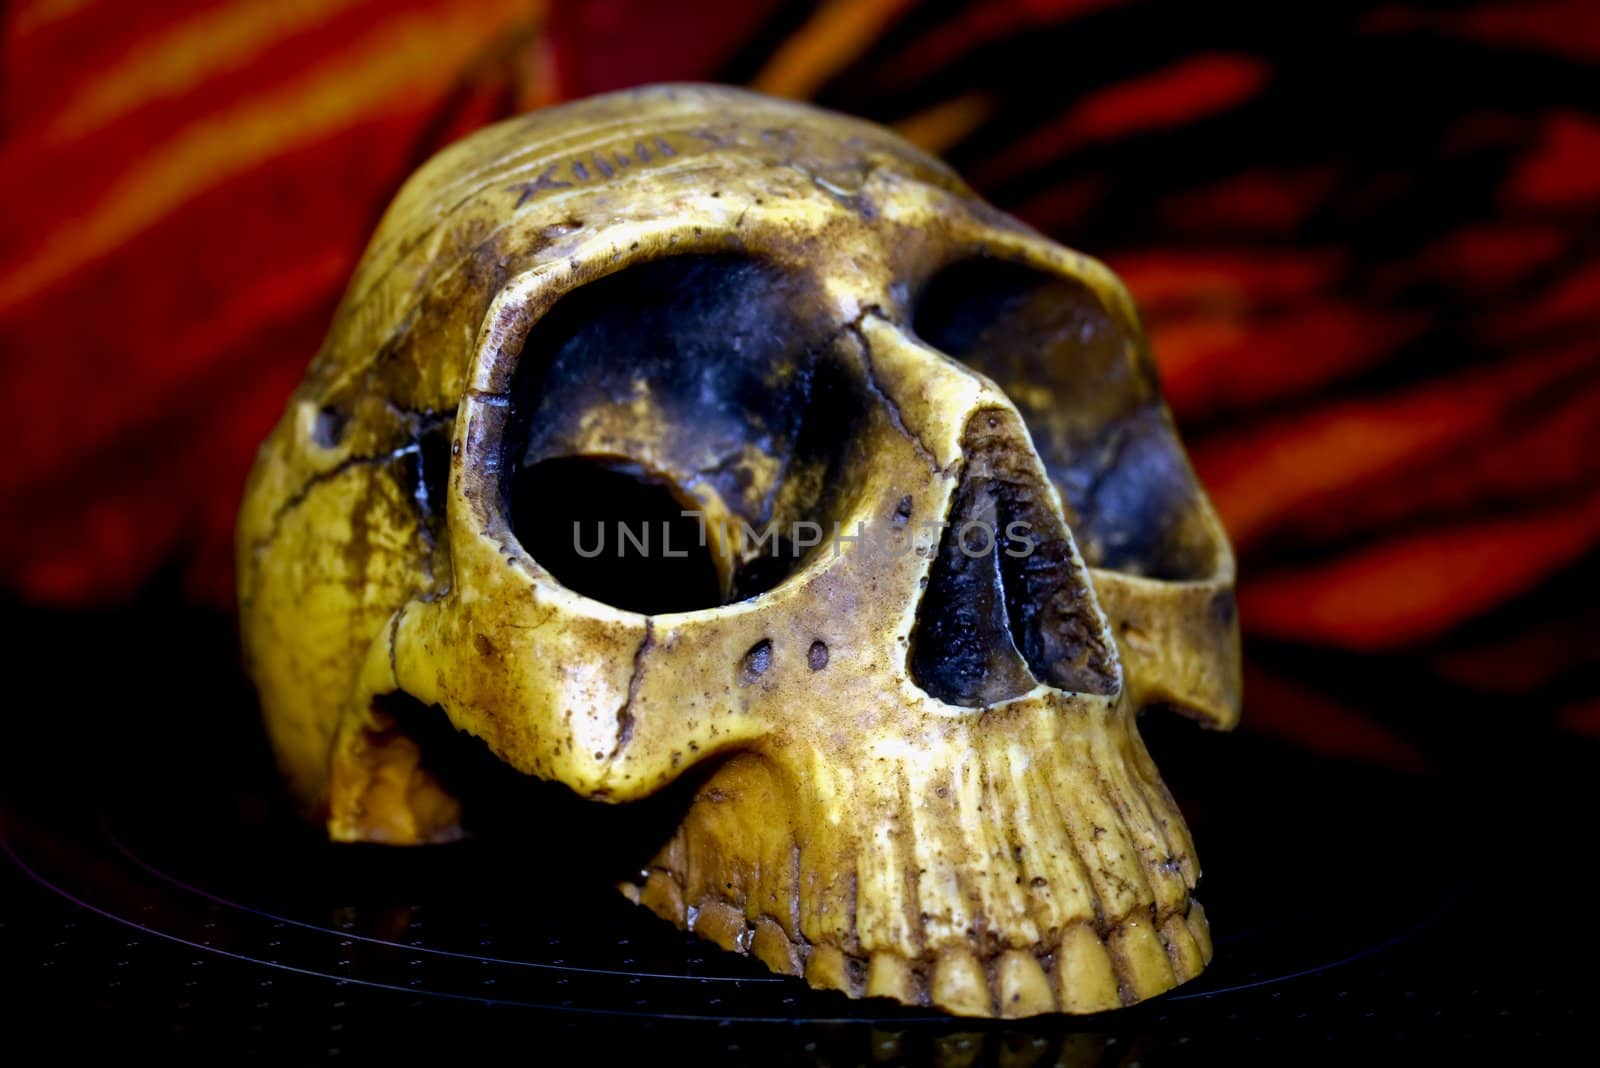 Skull of the person - a death symbol